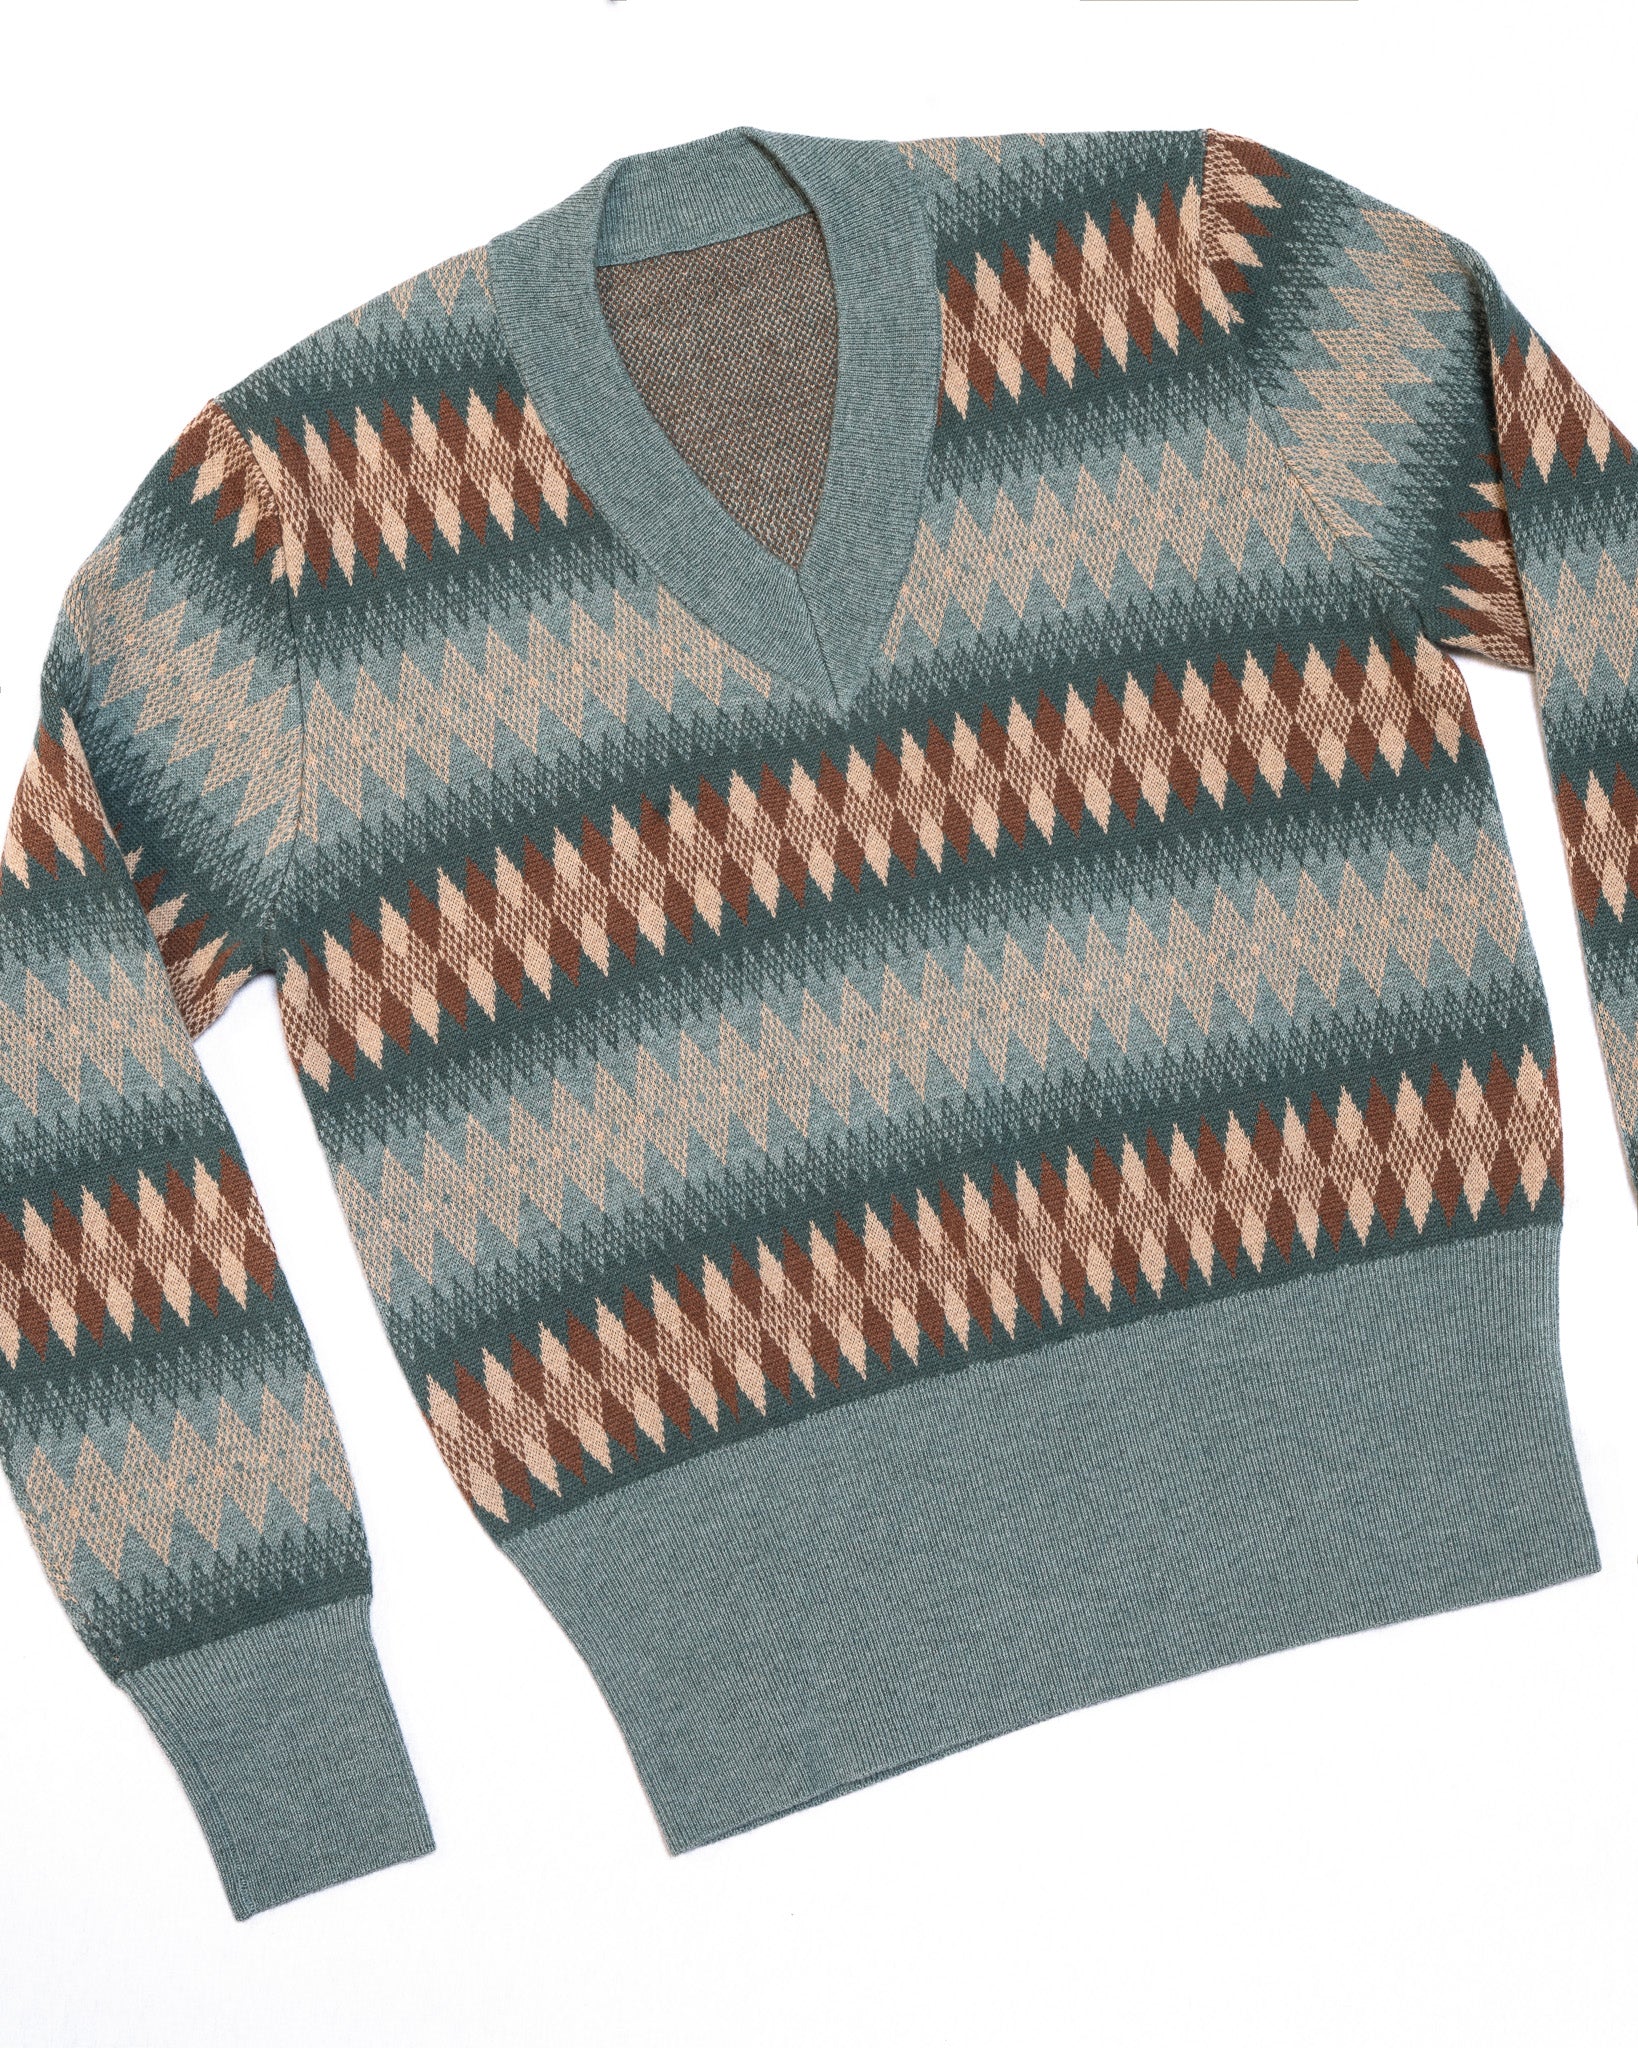 Men’s Vintage Sweaters, Retro Jumpers 1920s to 1980s   AT vintagedancer.com